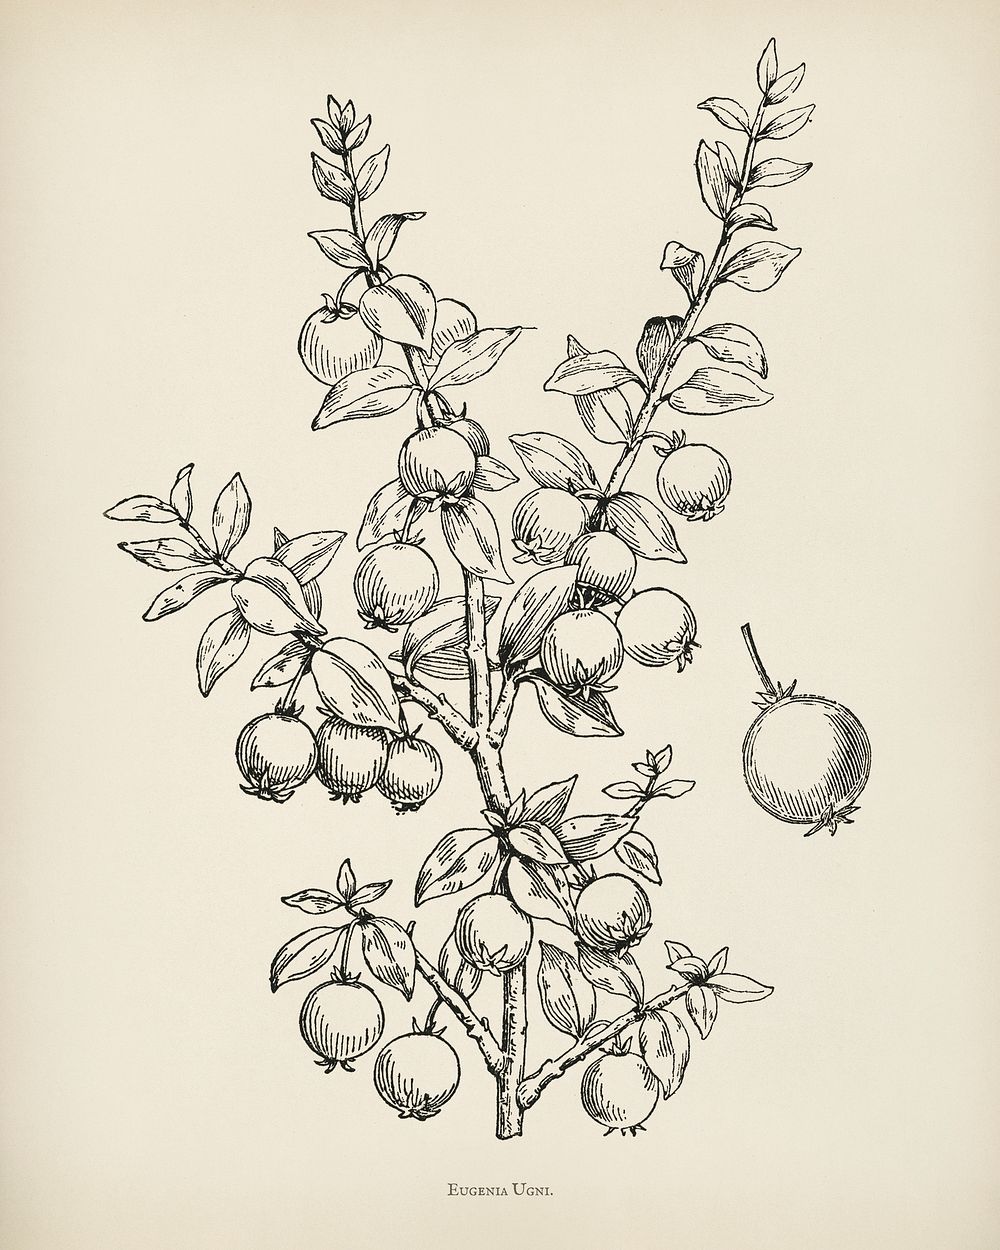  The fruit grower's guide  : Vintage illustration of eugenia ugni